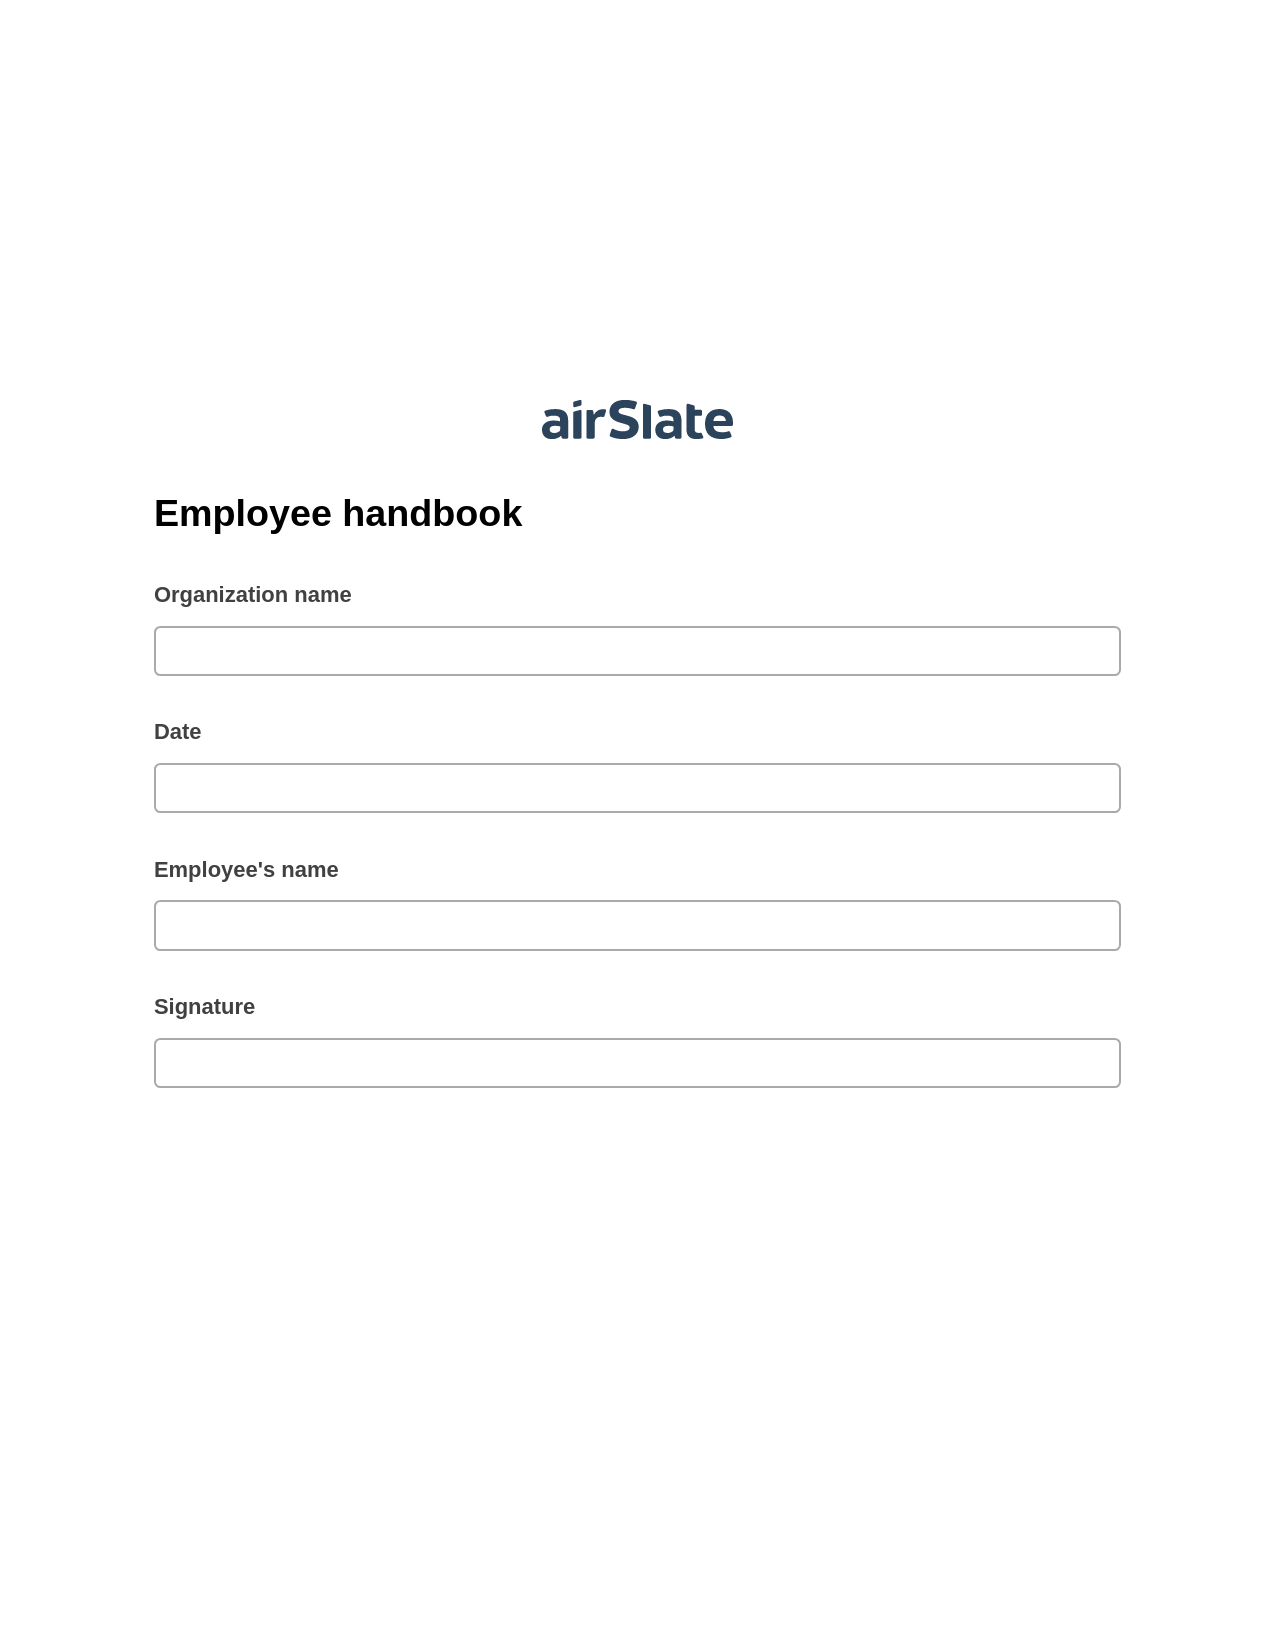 Employee handbook Pre-fill from Excel Spreadsheet Bot, Update Salesforce Record Bot, Box Bot